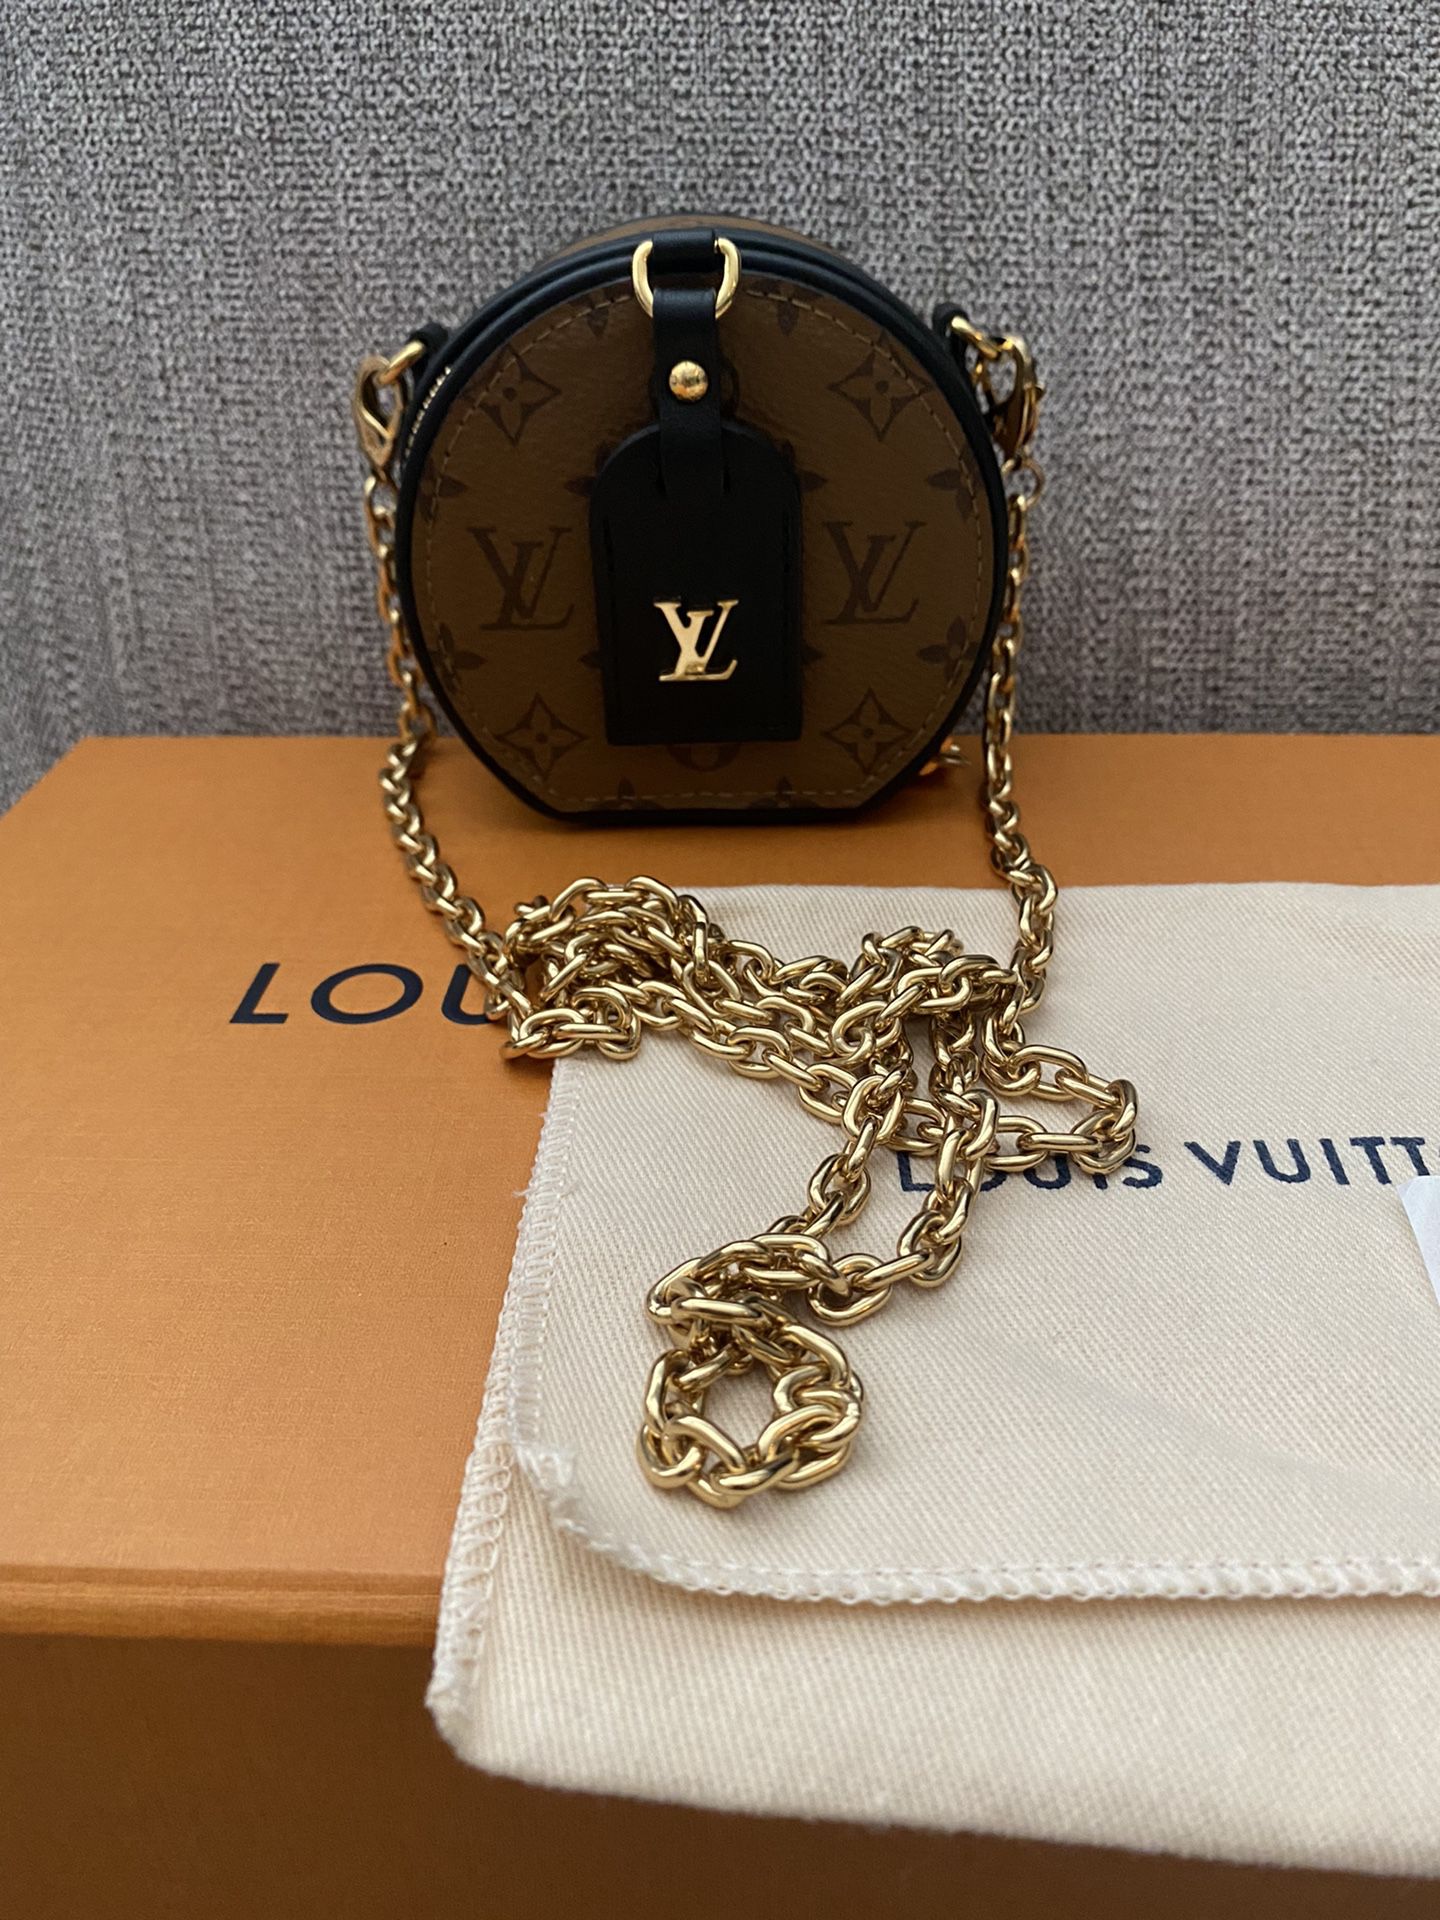 RARE Authentic Louis Vuitton Boite Chapeau Necklace for Sale in San Diego,  CA - OfferUp